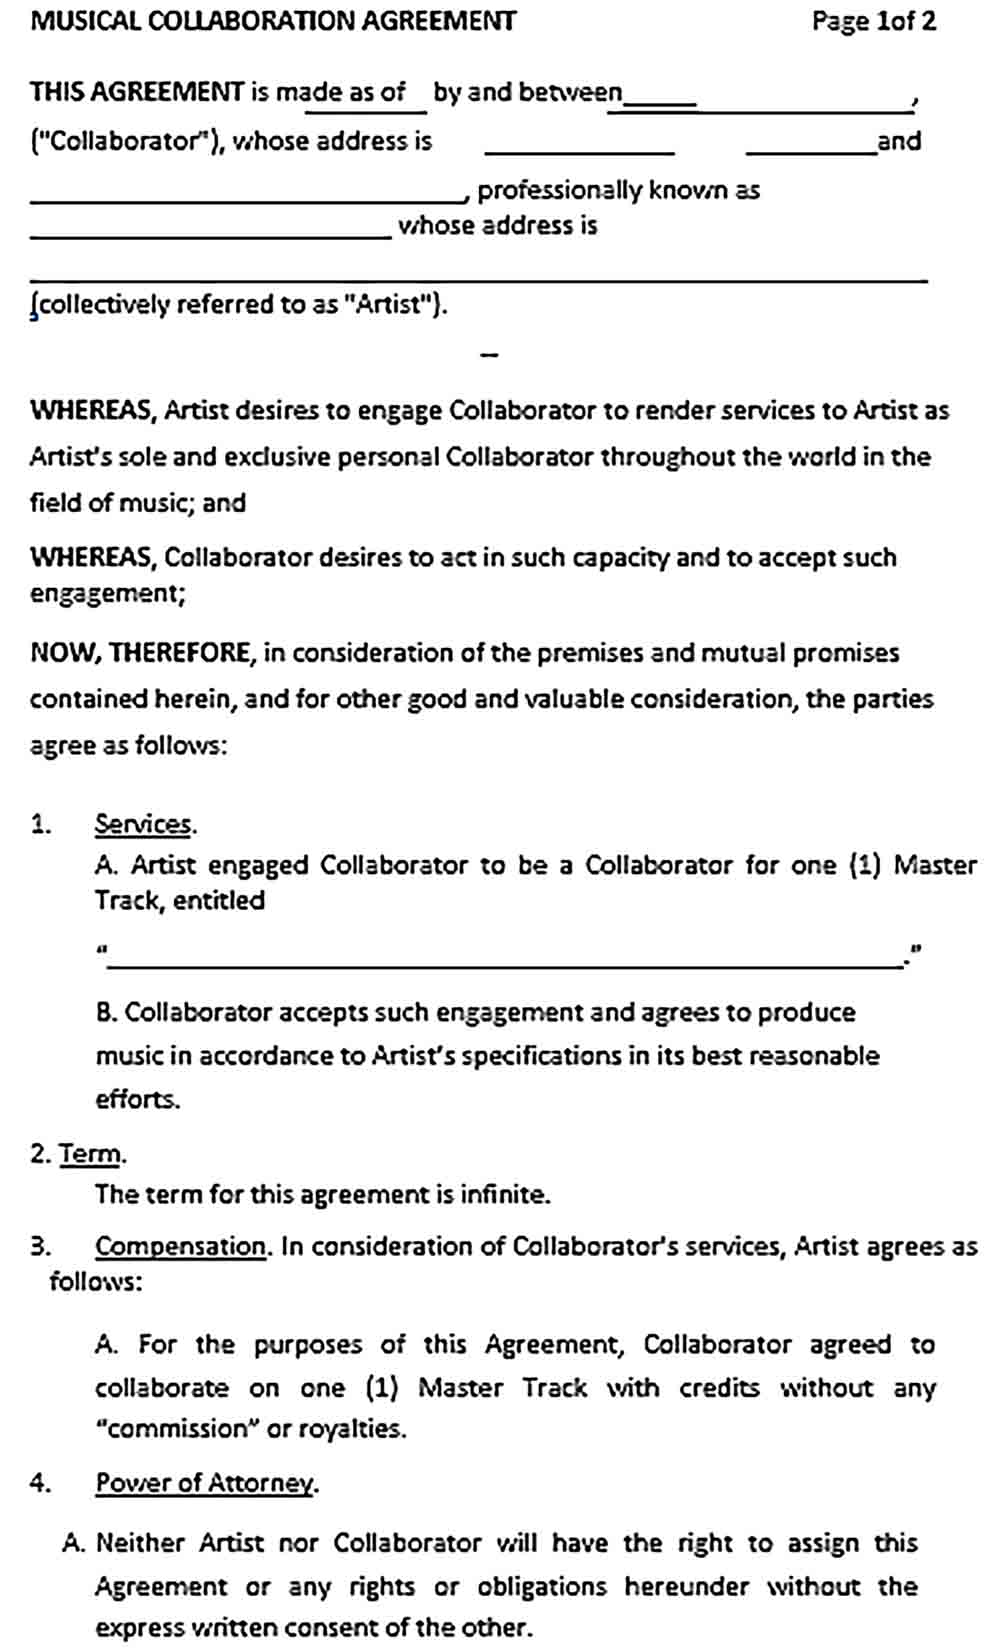 Sample Music Collaboration Agreement